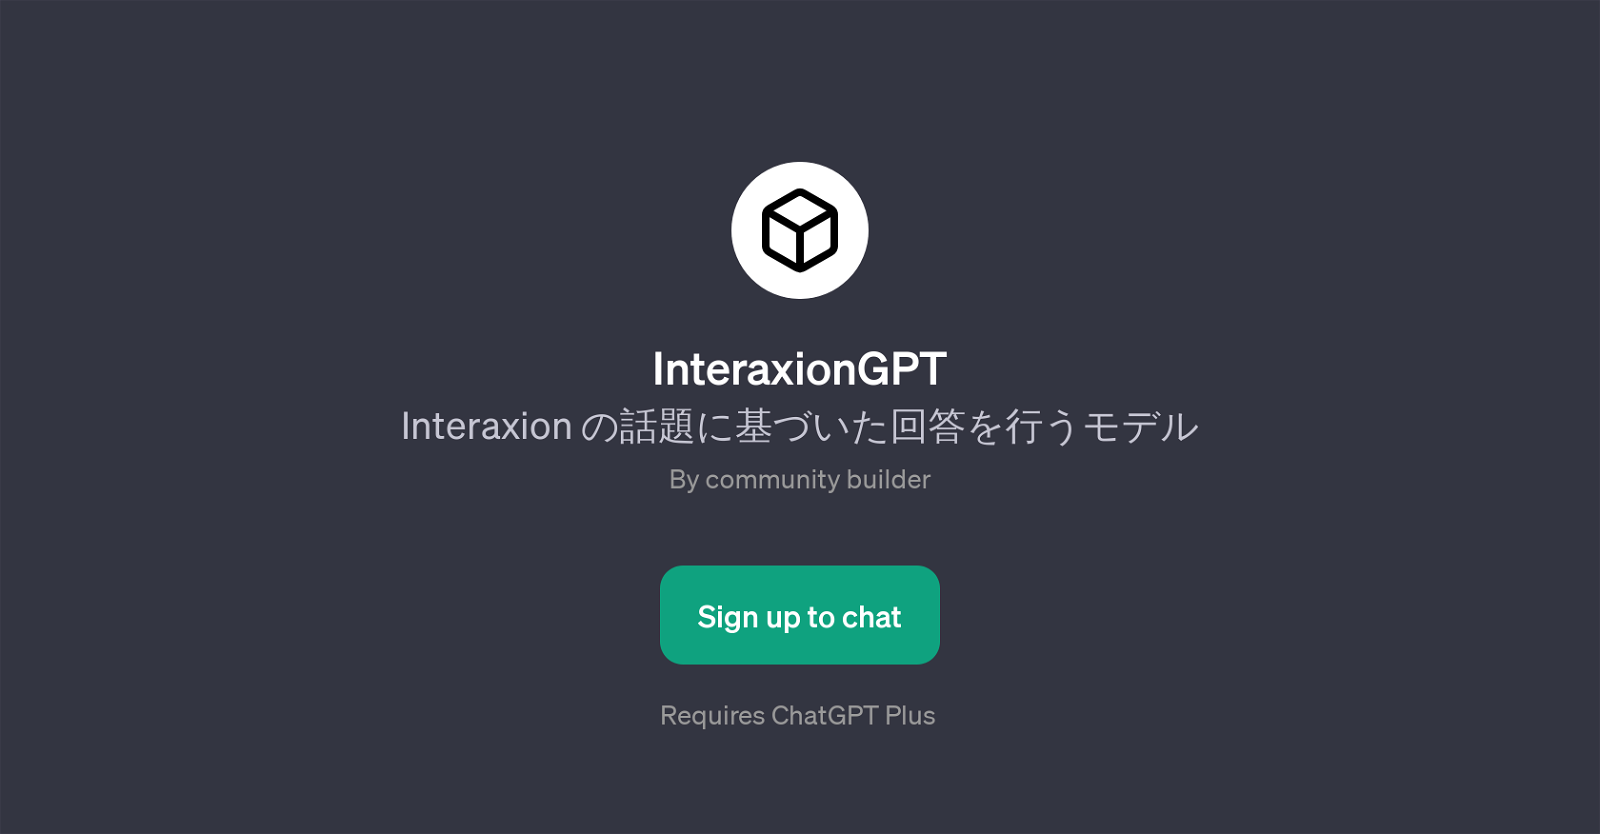 InteraxionGPT website